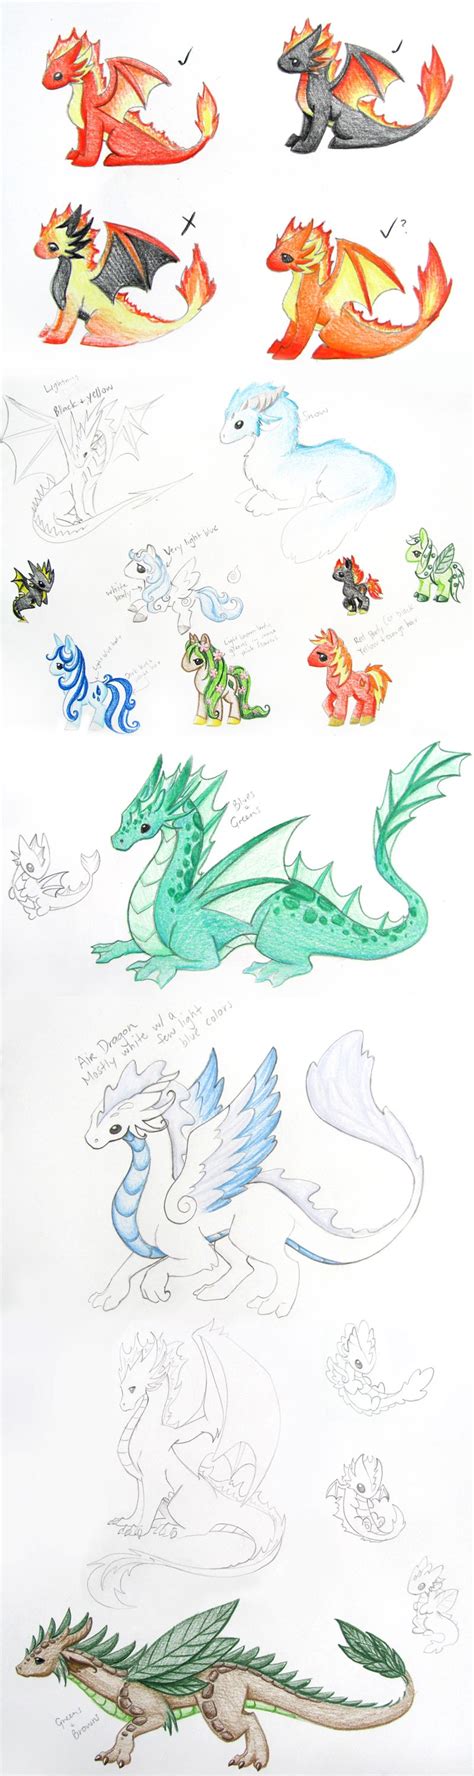 Elemental Concepts By Dragonsandbeasties On Deviantart Drawings